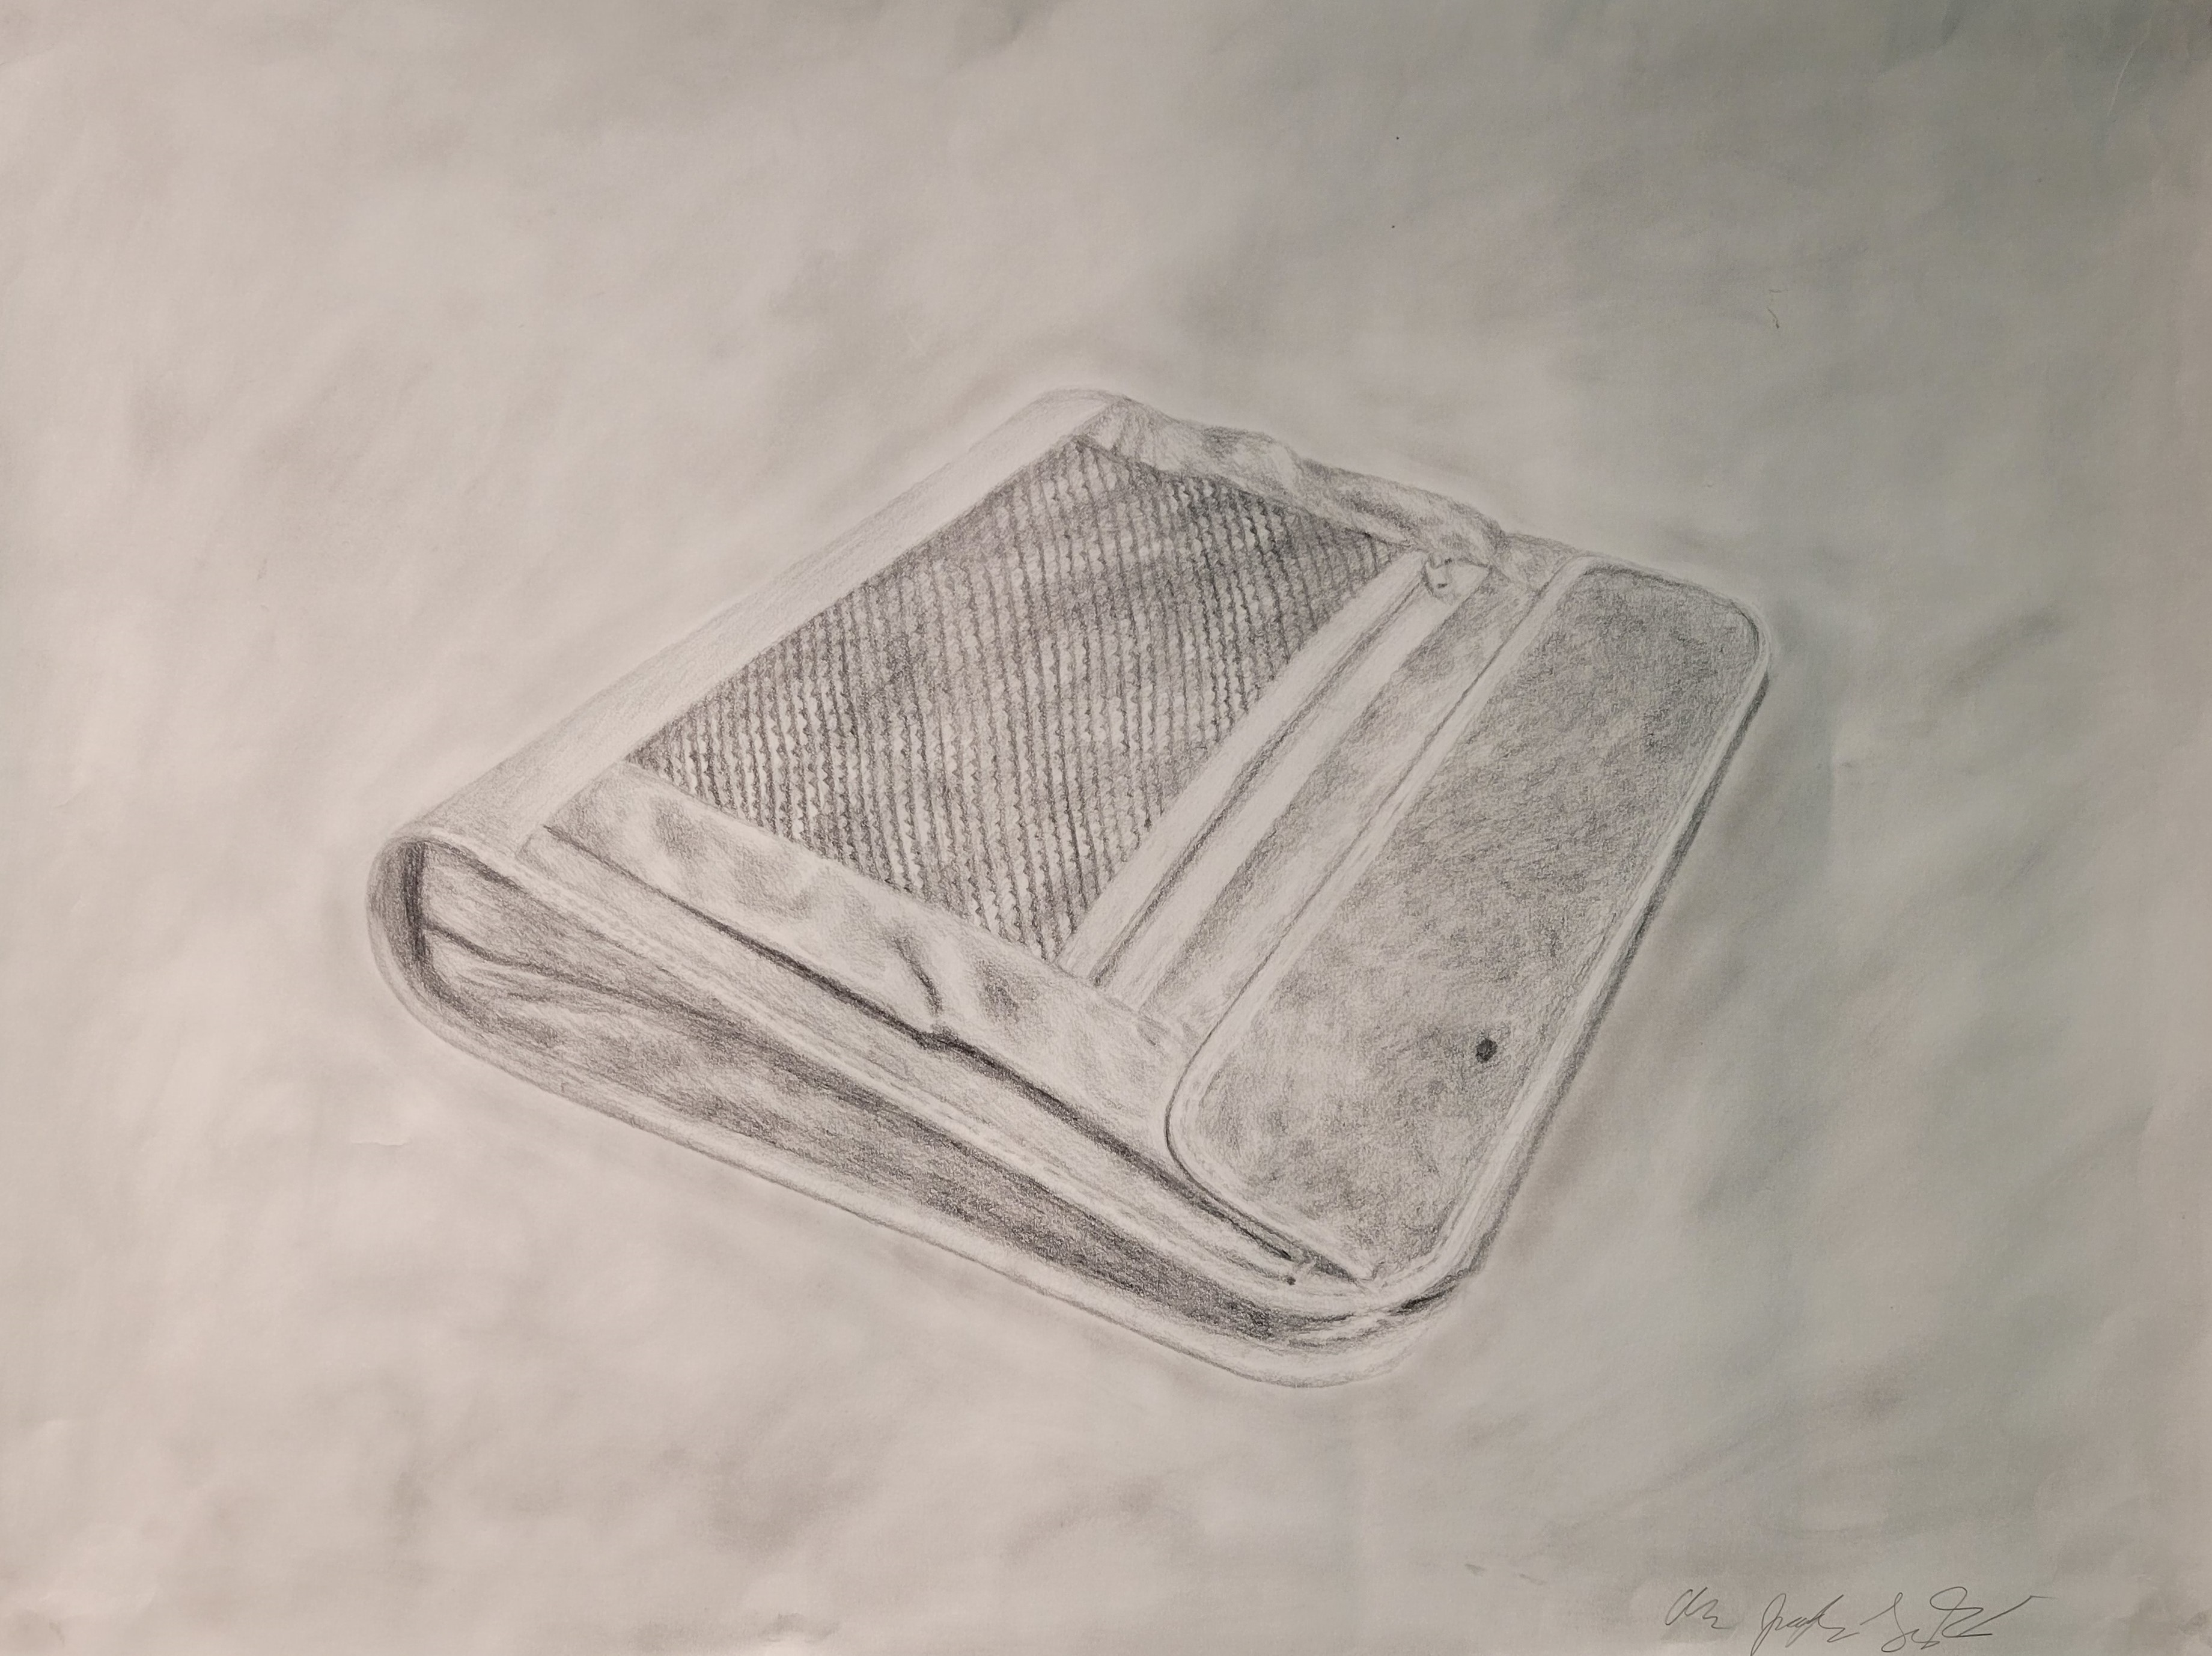 a sketch of a cloth 3-ring binder